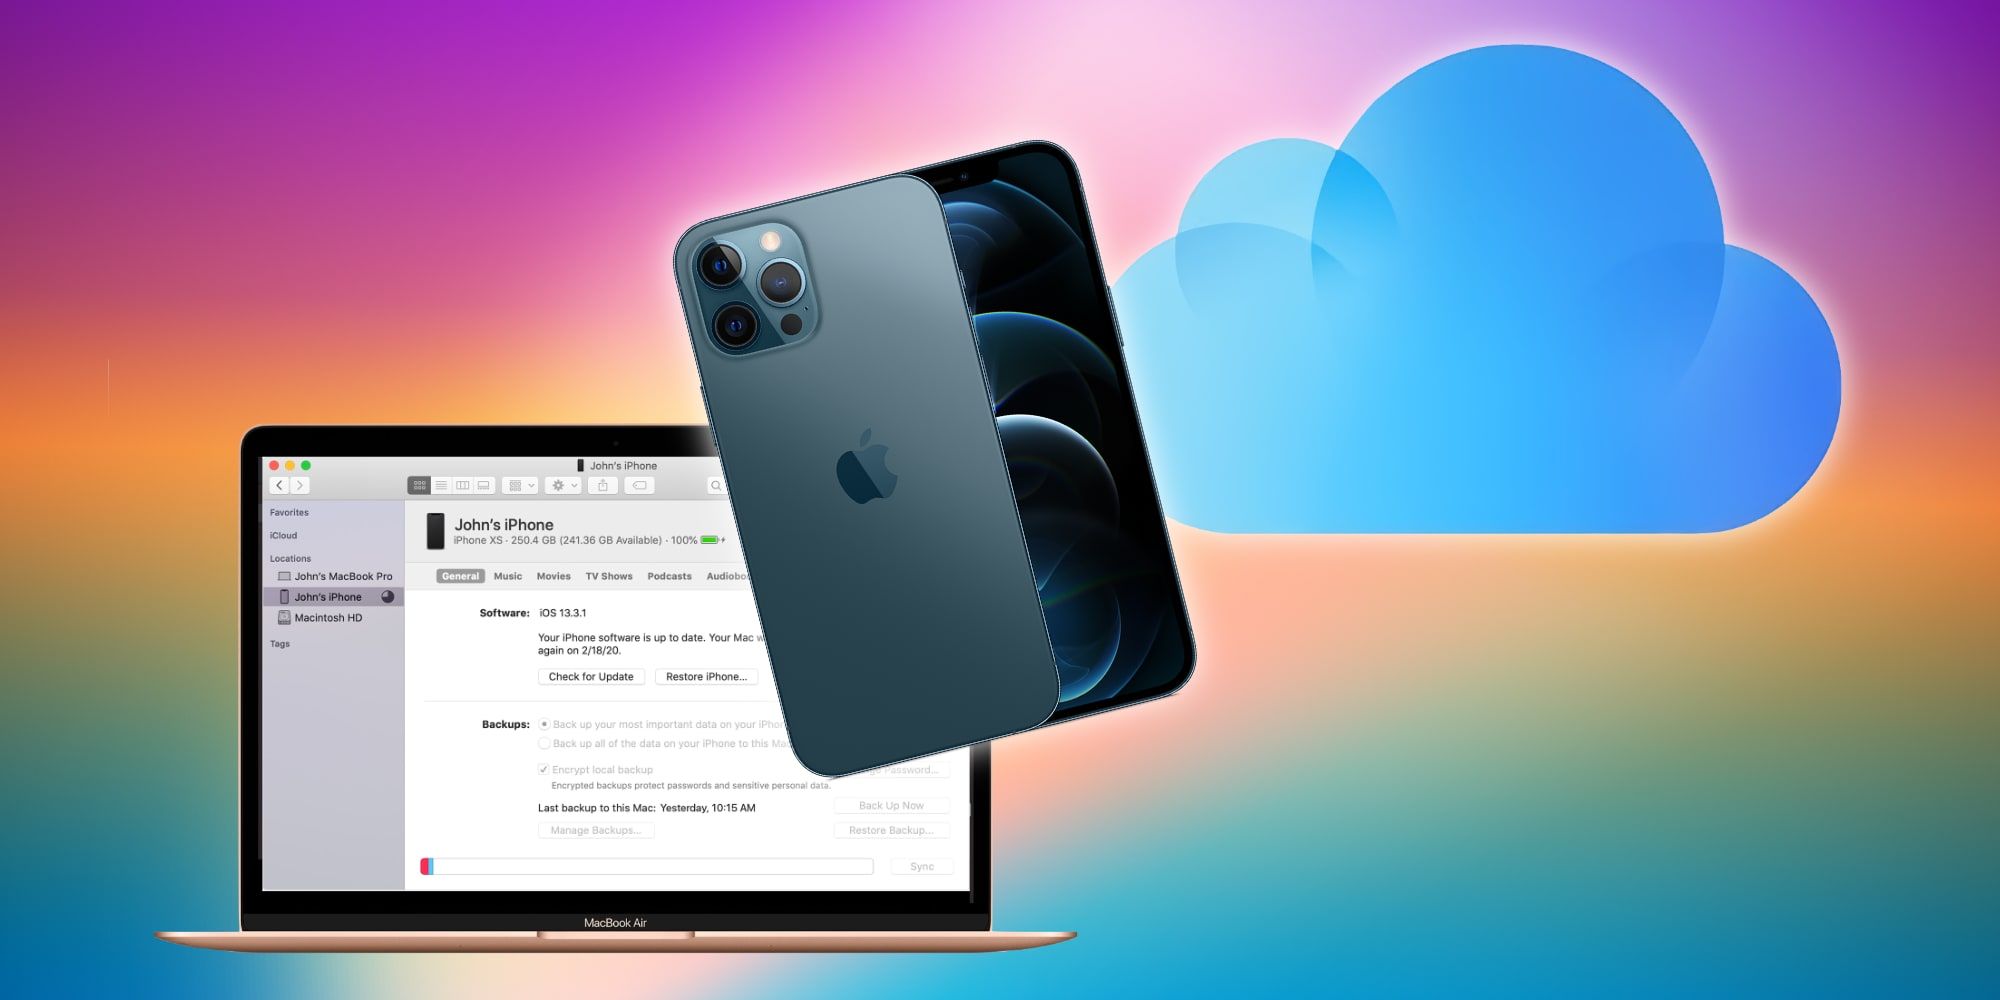 Apple iPhone Backups To iCloud &amp; Mac